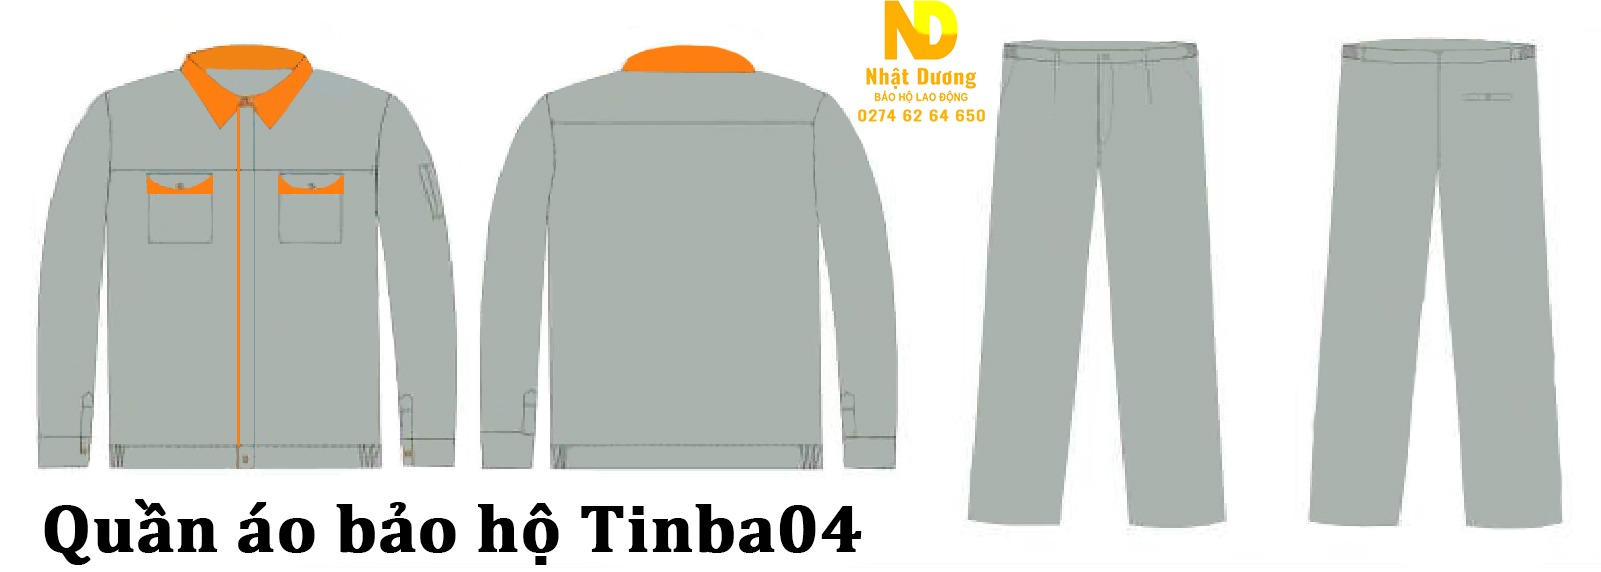 Quần áo bảo hộ kỹ sư Tinba 04